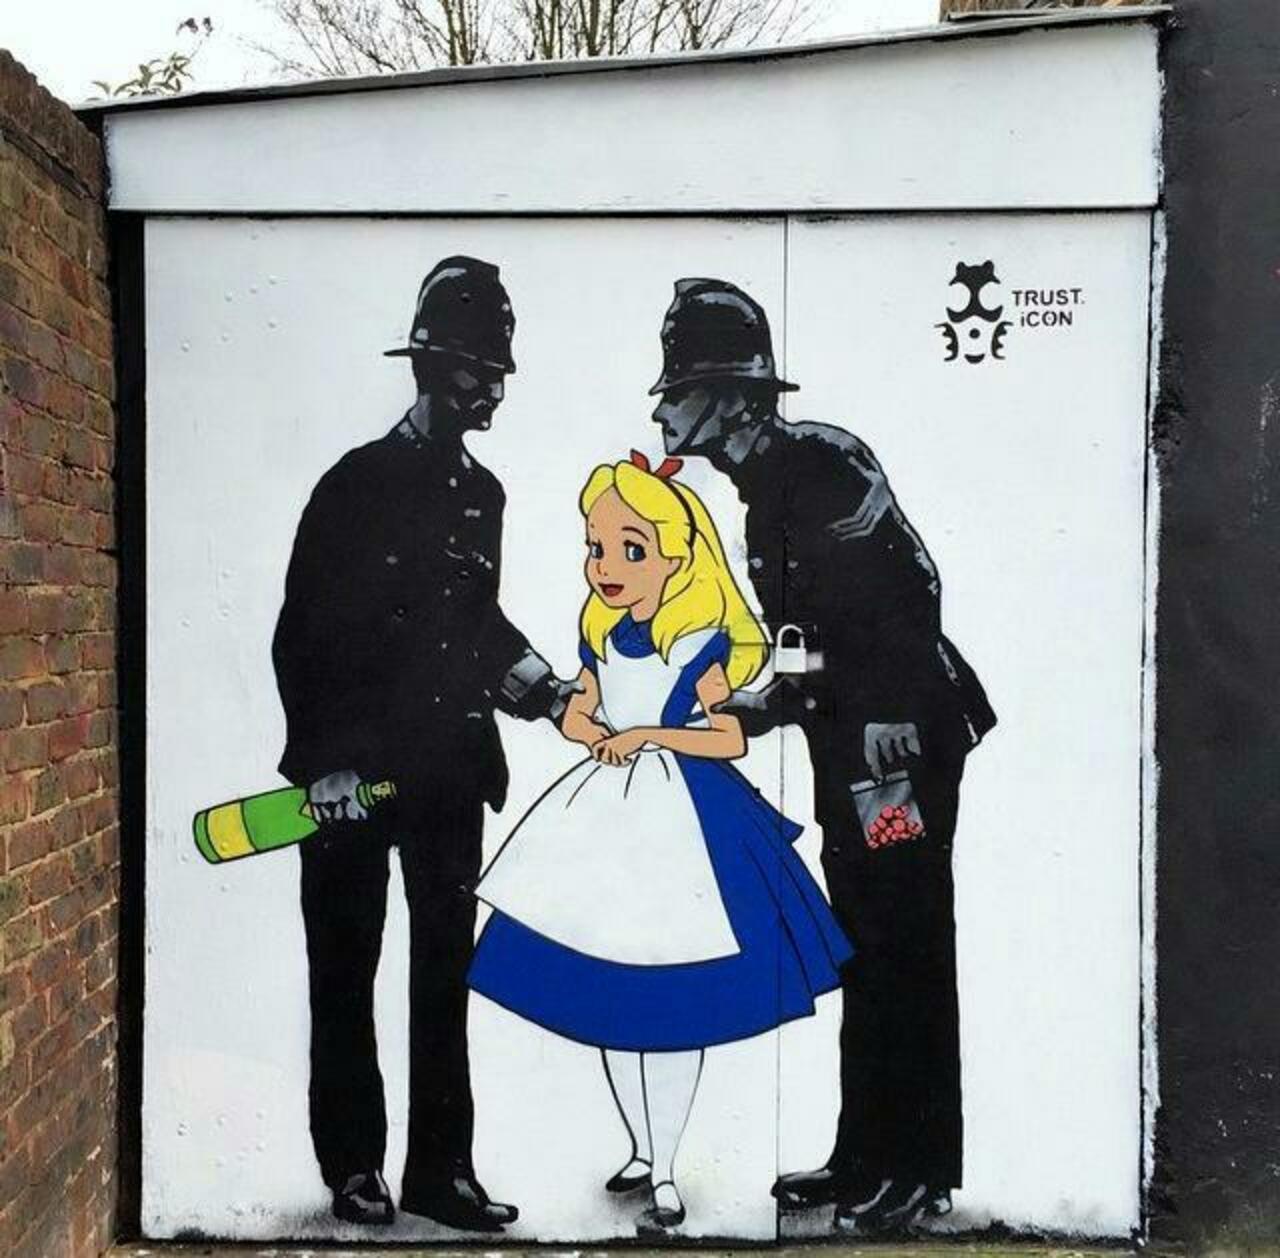 RT @Dylan_Dice: Nuevo street art de iCON en Camden, Londres, UK 

#art #arte #graffiti #streetart http://t.co/PXll3msUSd